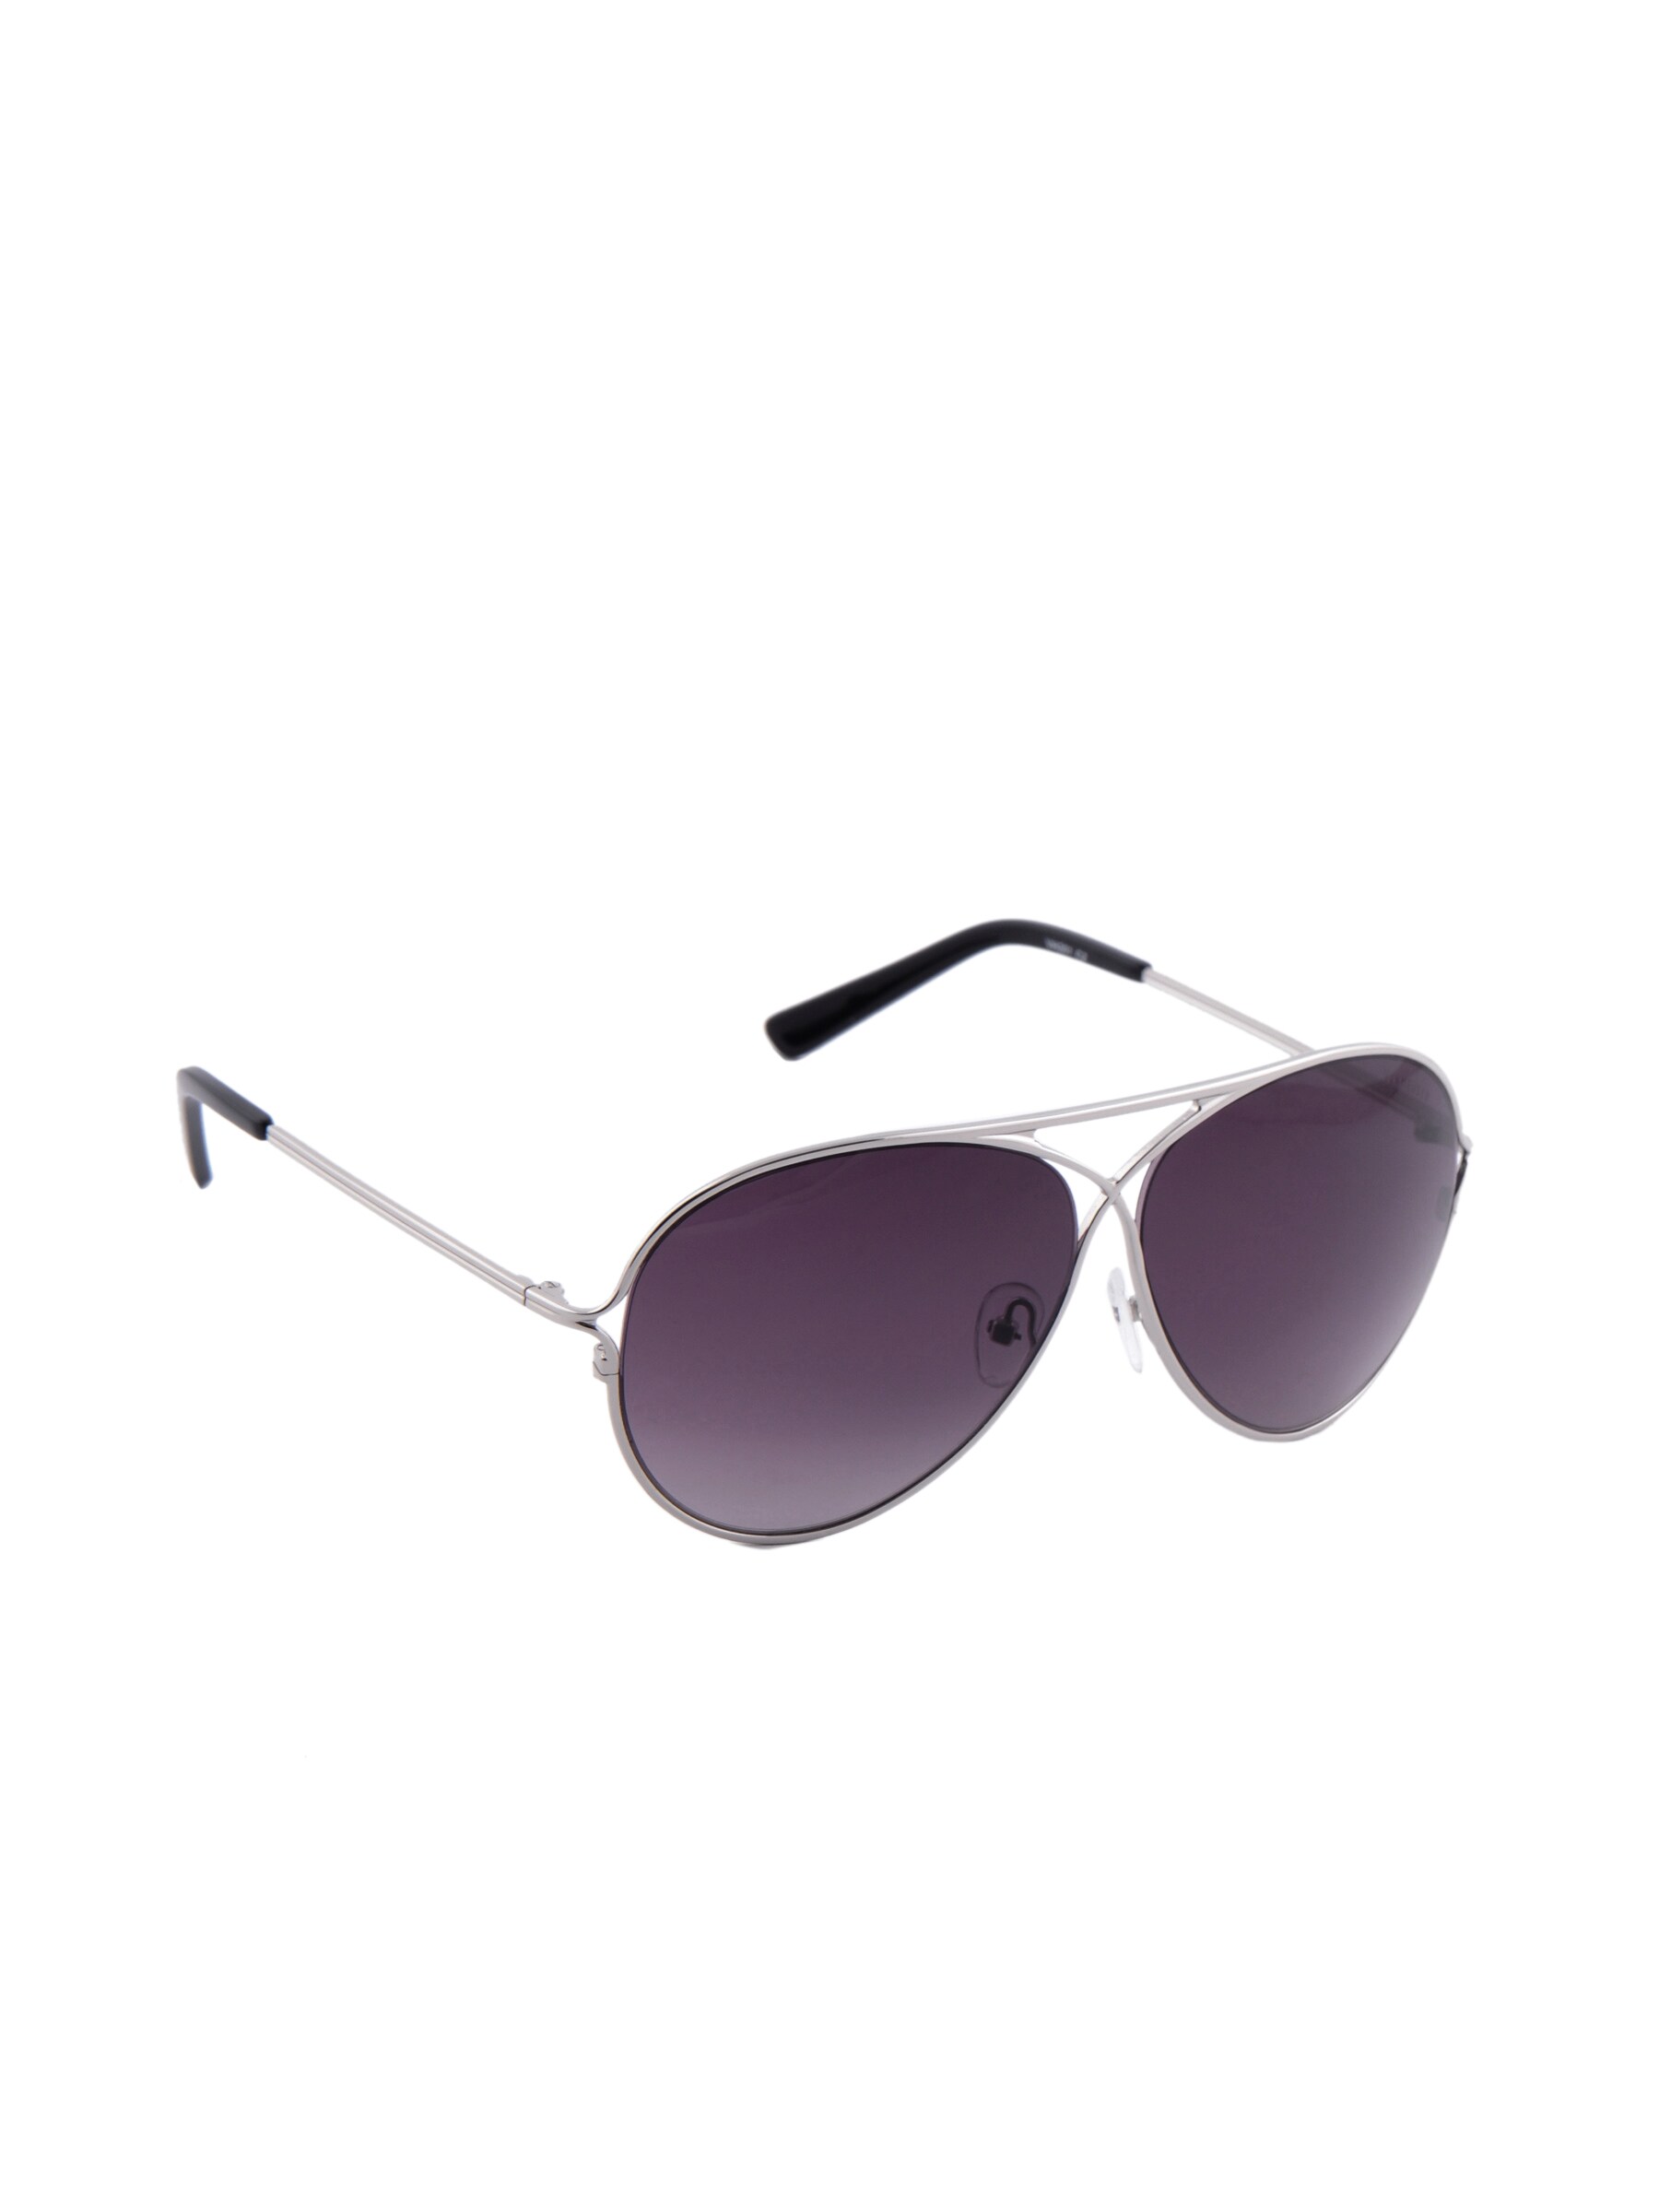 Van Heusen Women Casual Silver Frame Sunglasses